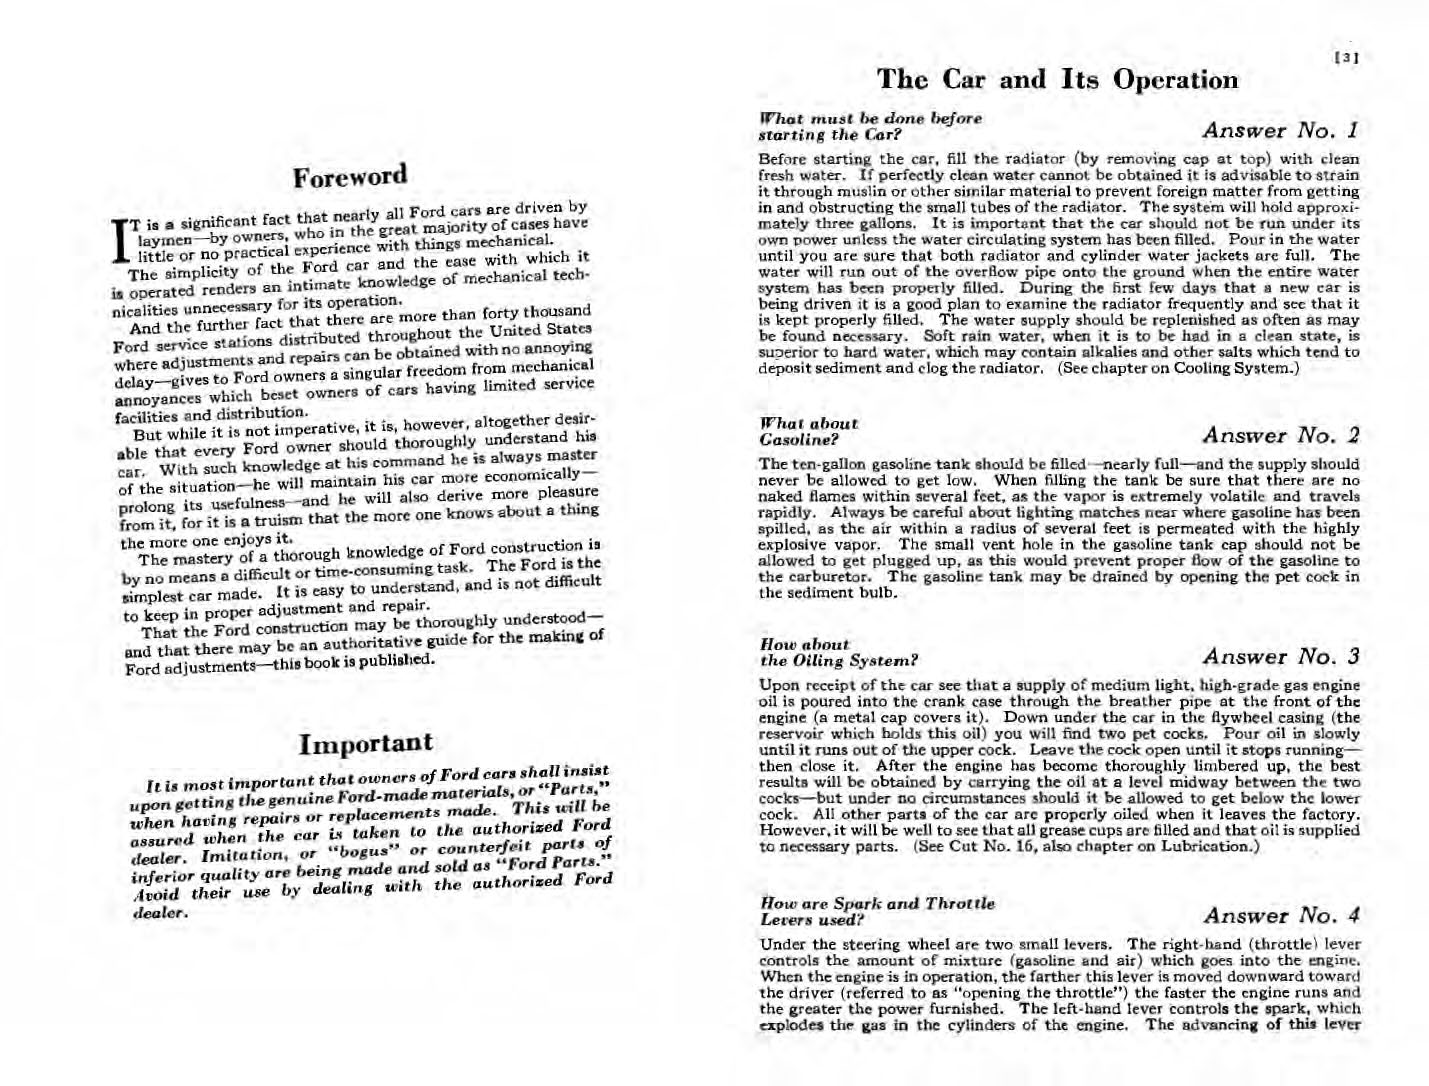 n_1926 Ford Owners Manual-02-03.jpg